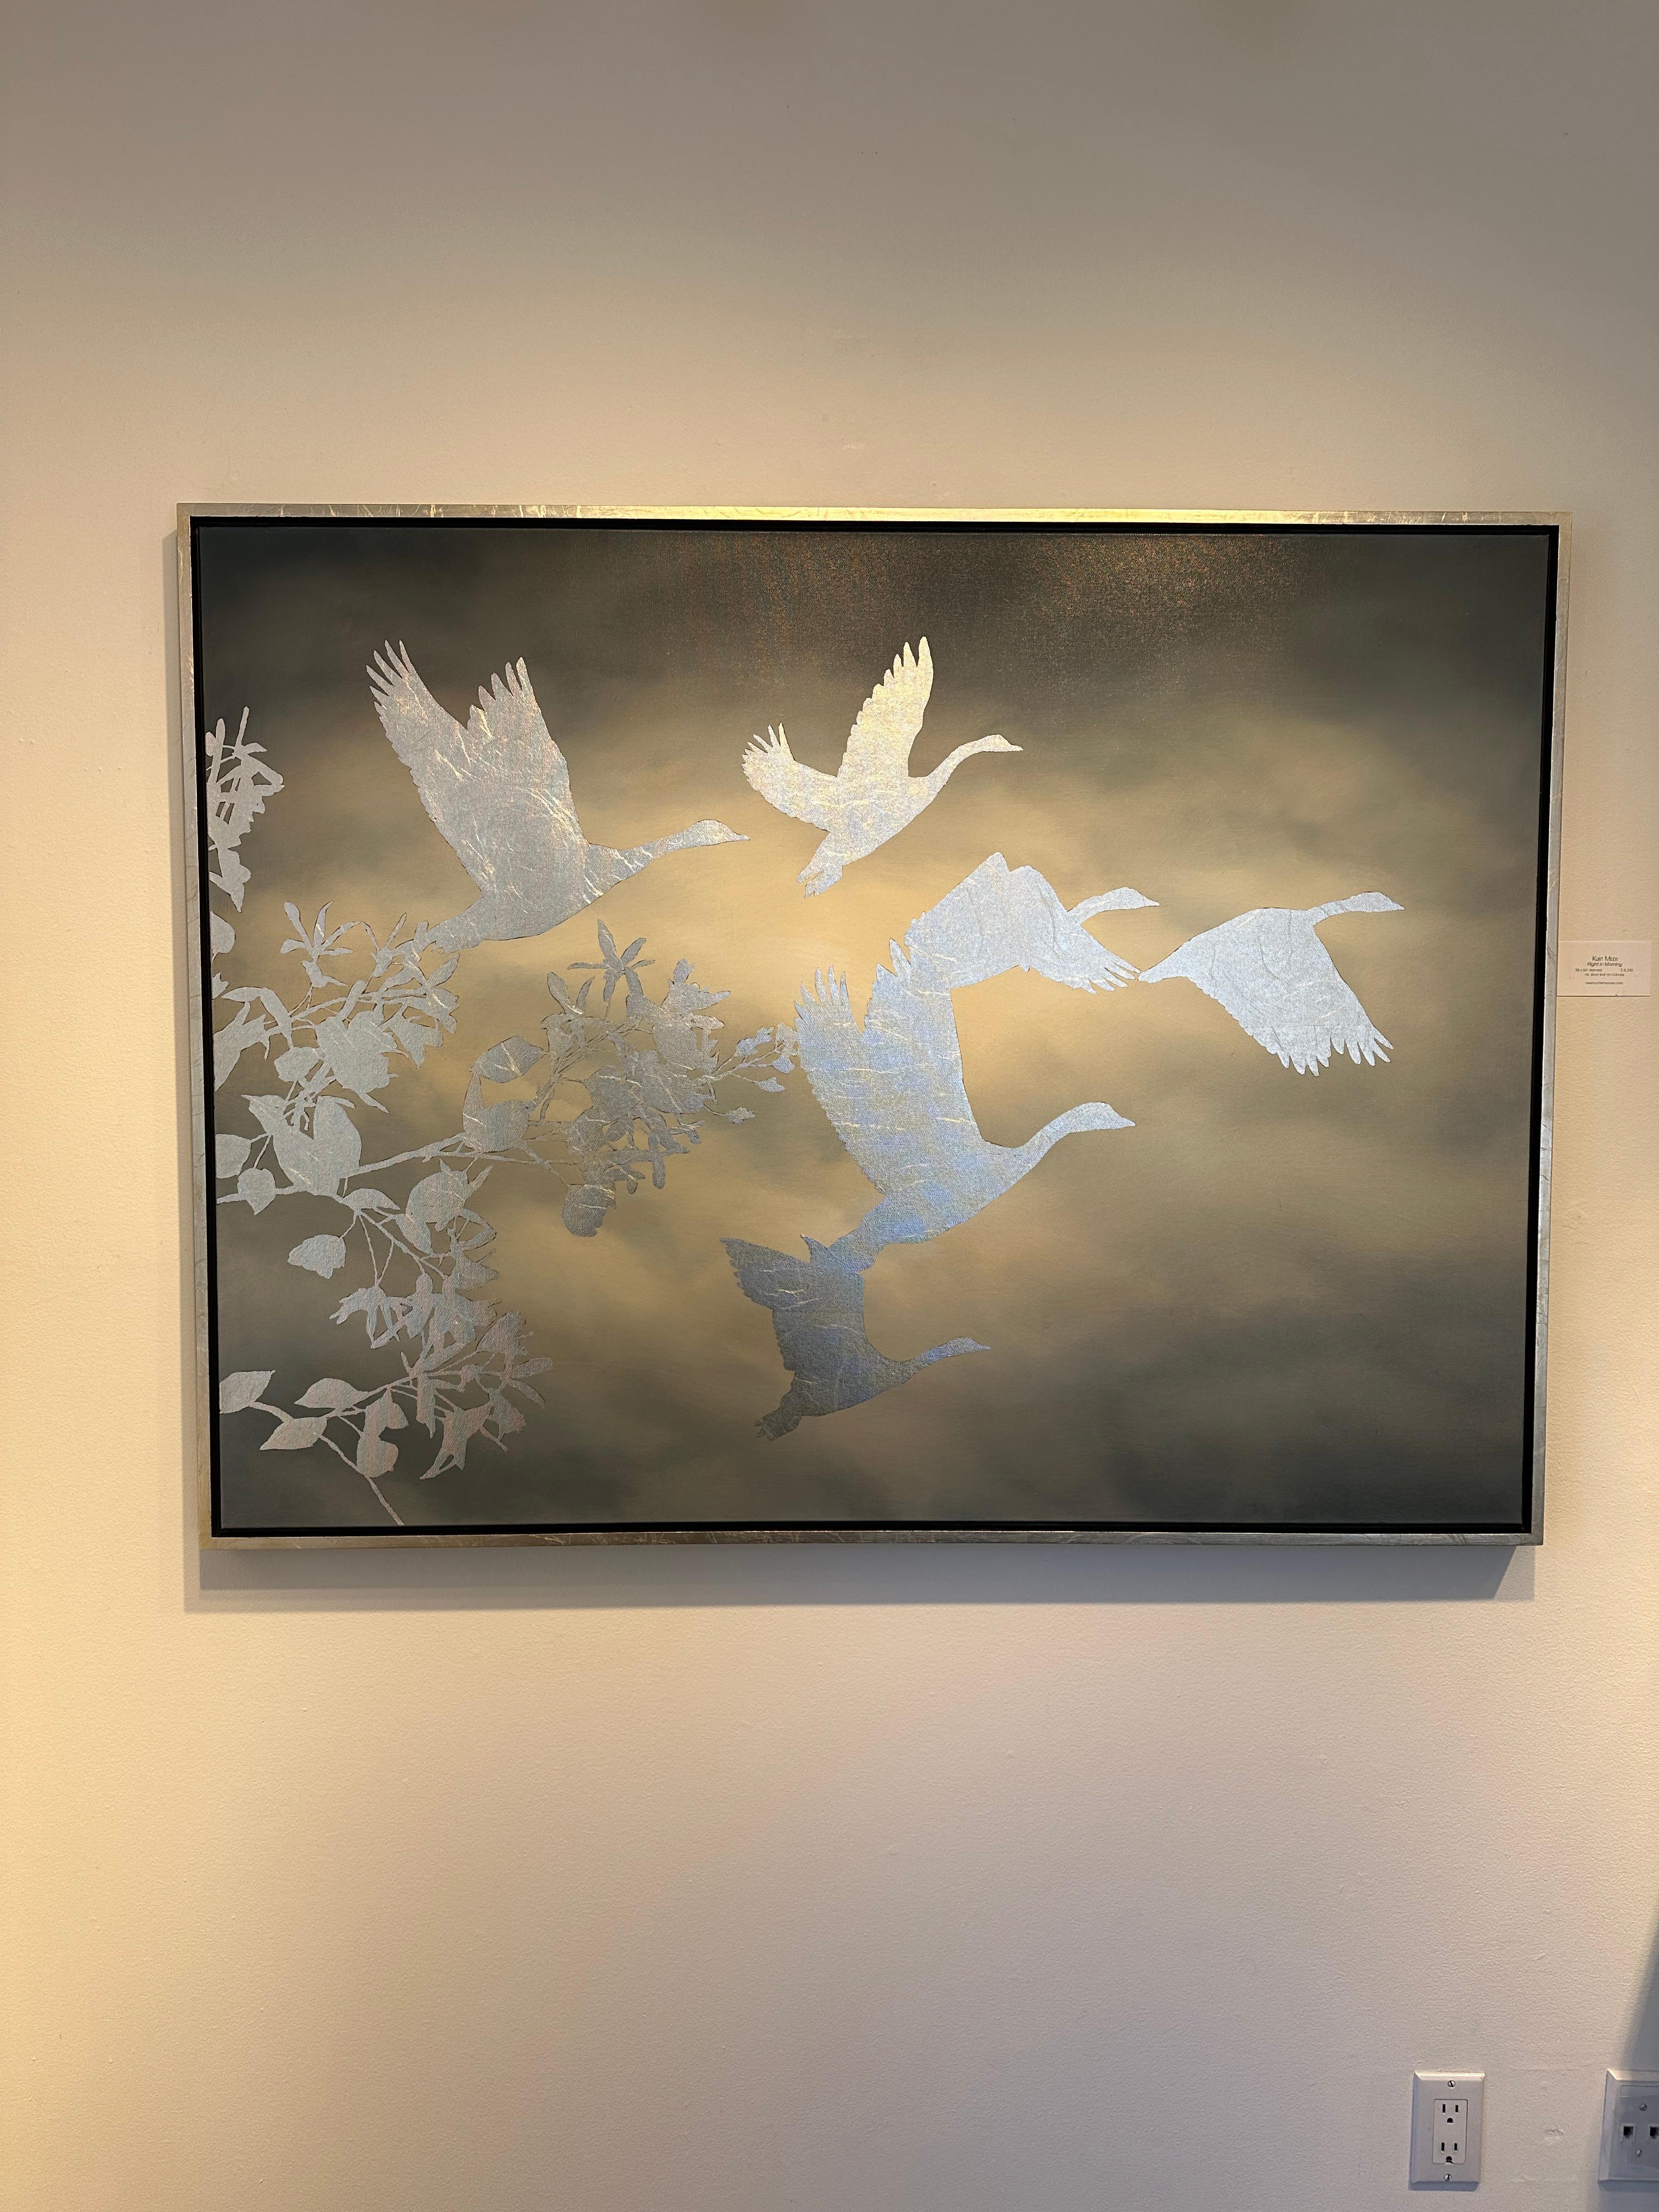 Flight in Morning - Painting by Kurt Meer